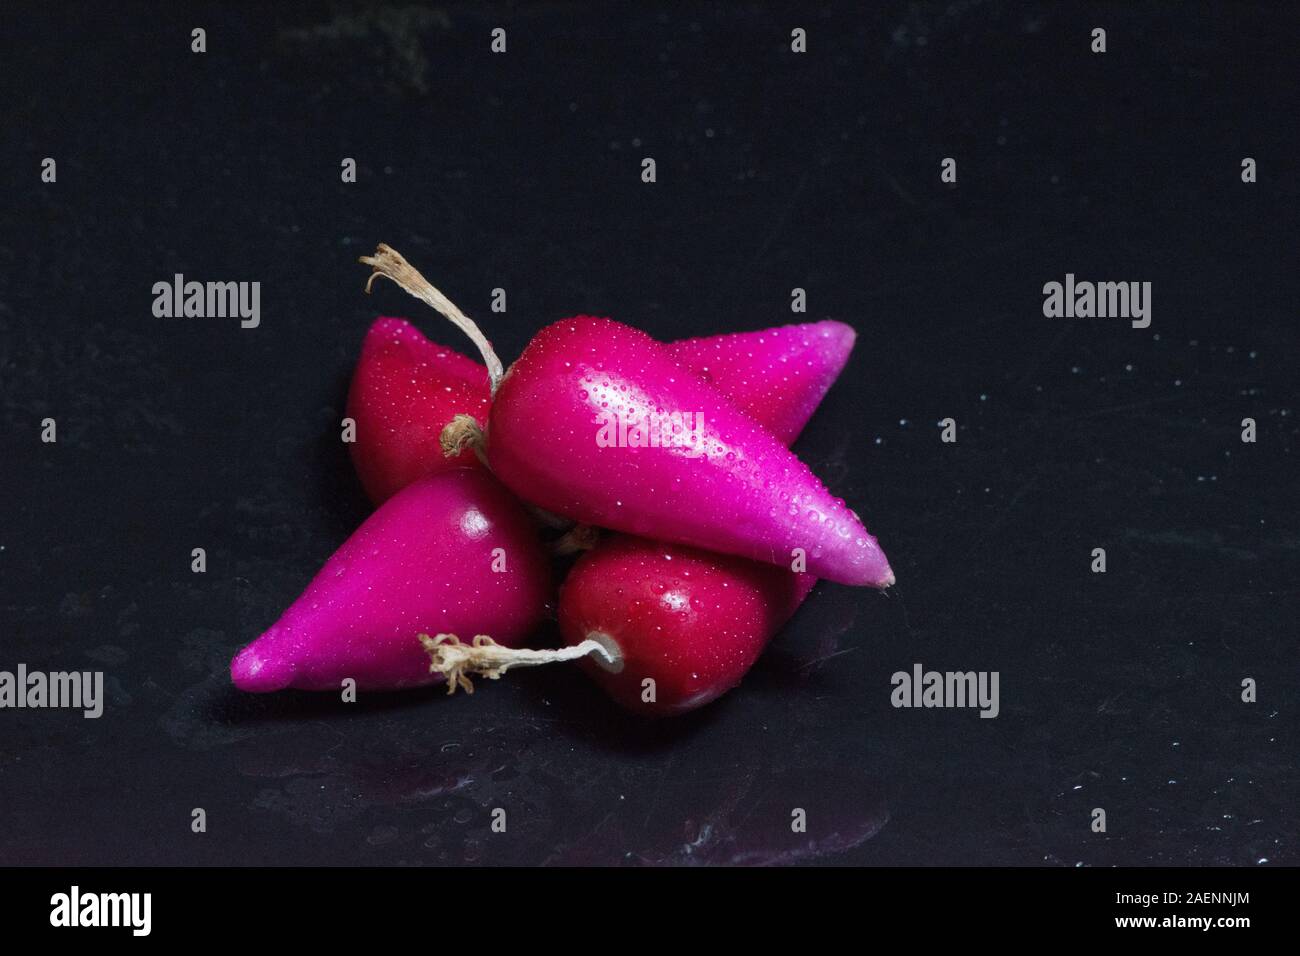 Pitiguey Pink Fruit Close up on Black Background Stock Photo